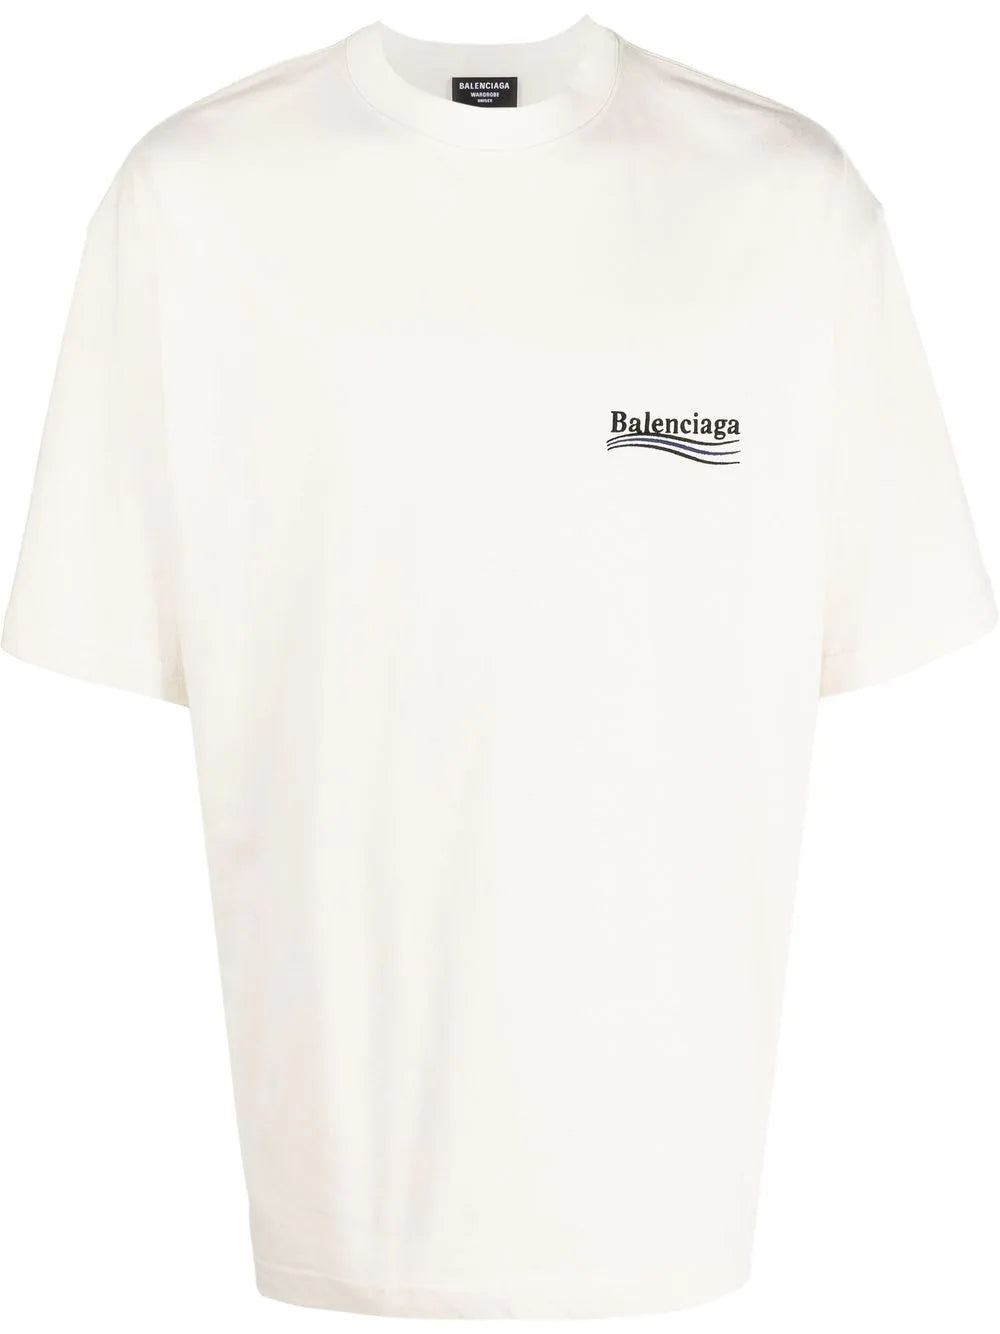 BALENCIAGA UNISEX Political Campaign T-shirt Dirty White - MAISONDEFASHION.COM